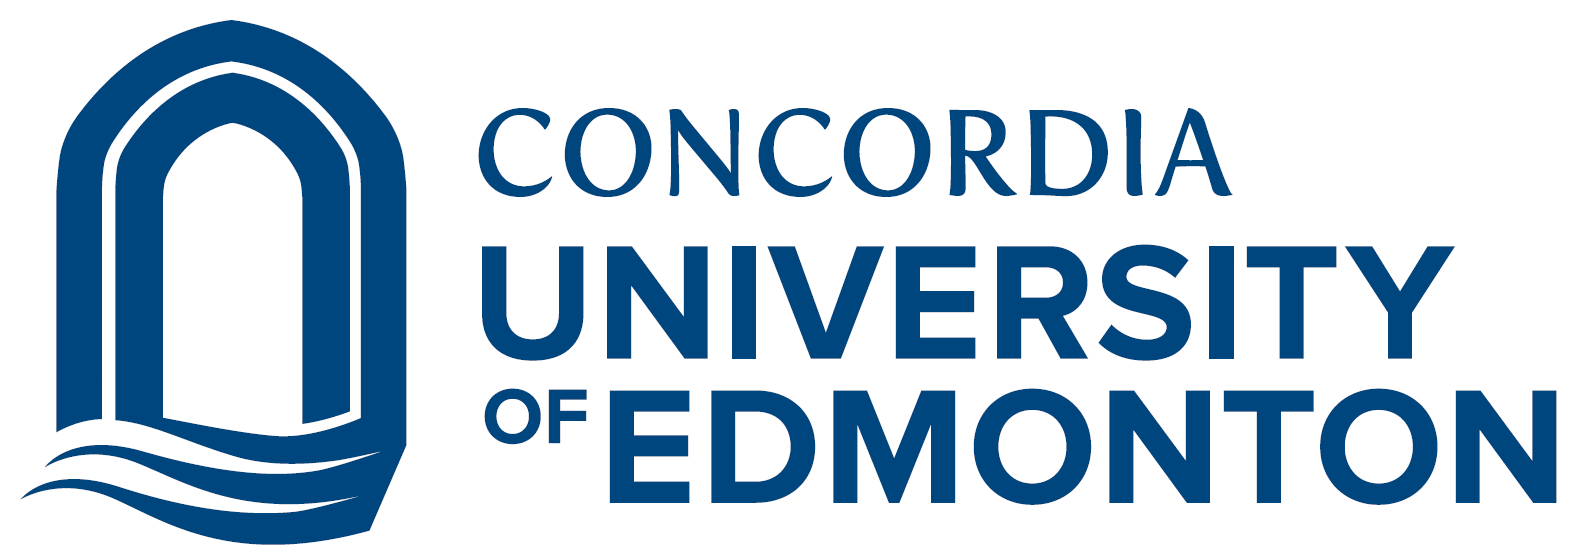 Concordia University of Edmonton | Canada